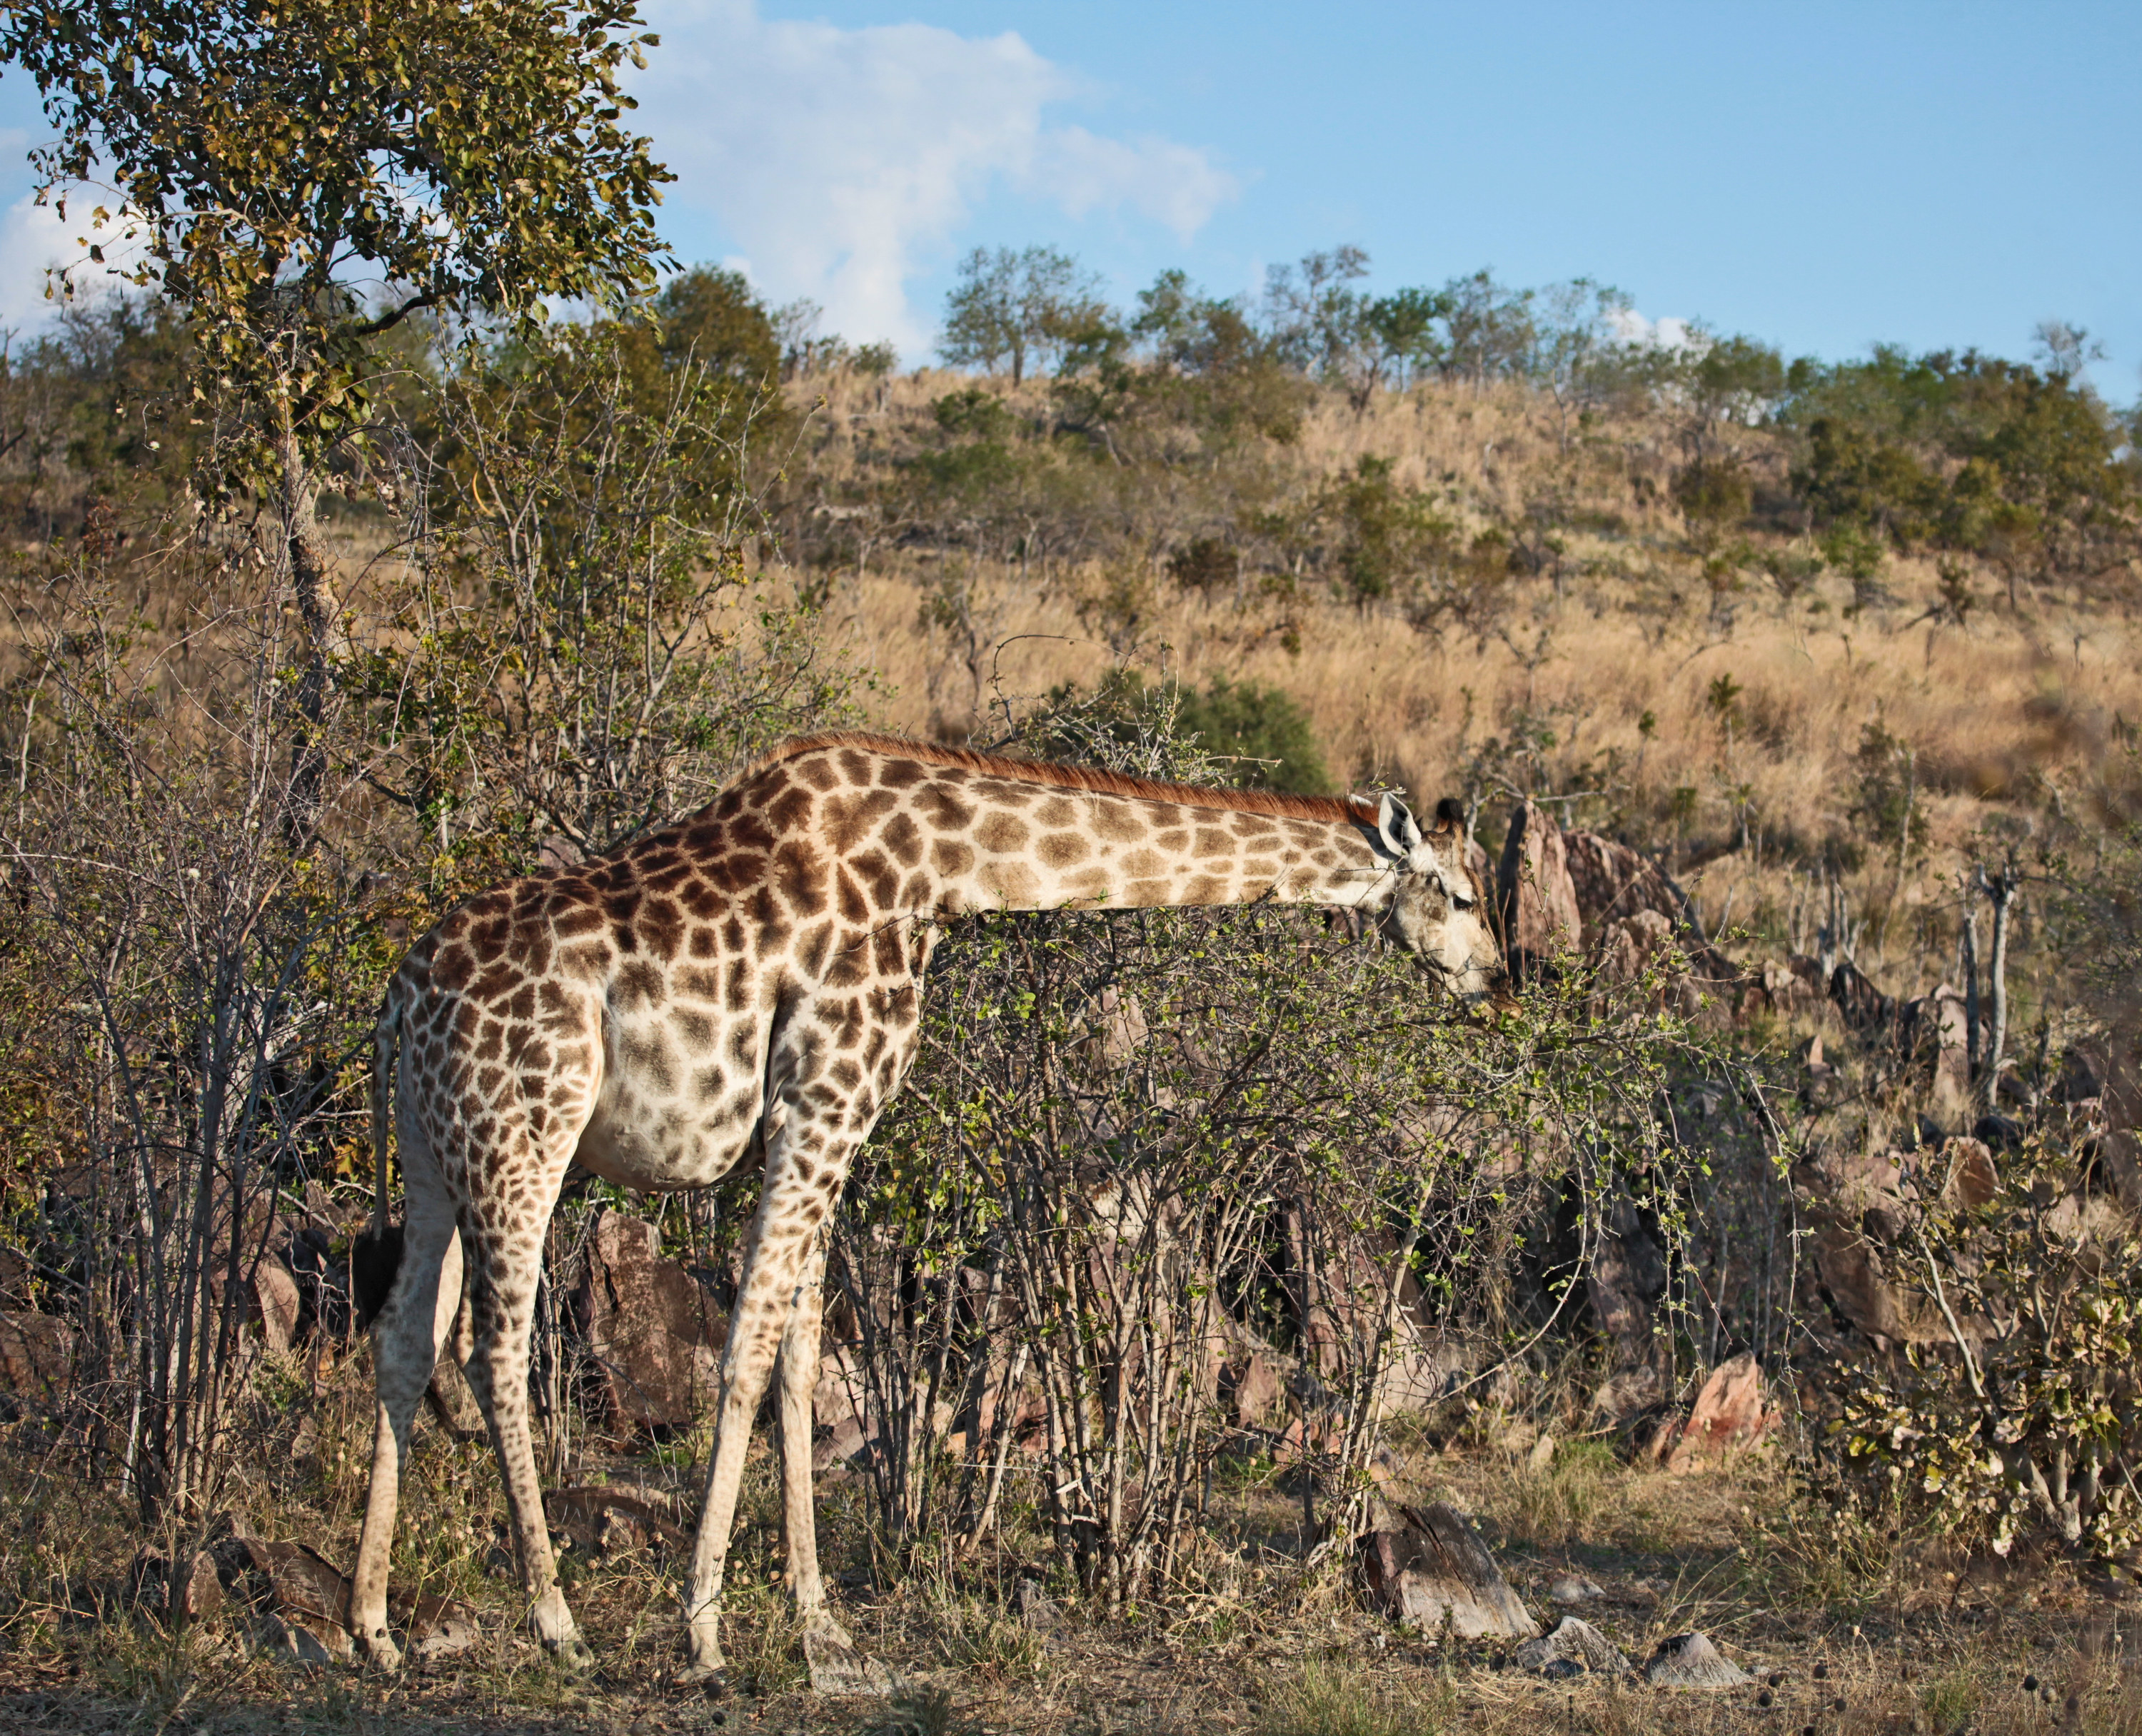 a pregnant giraffe